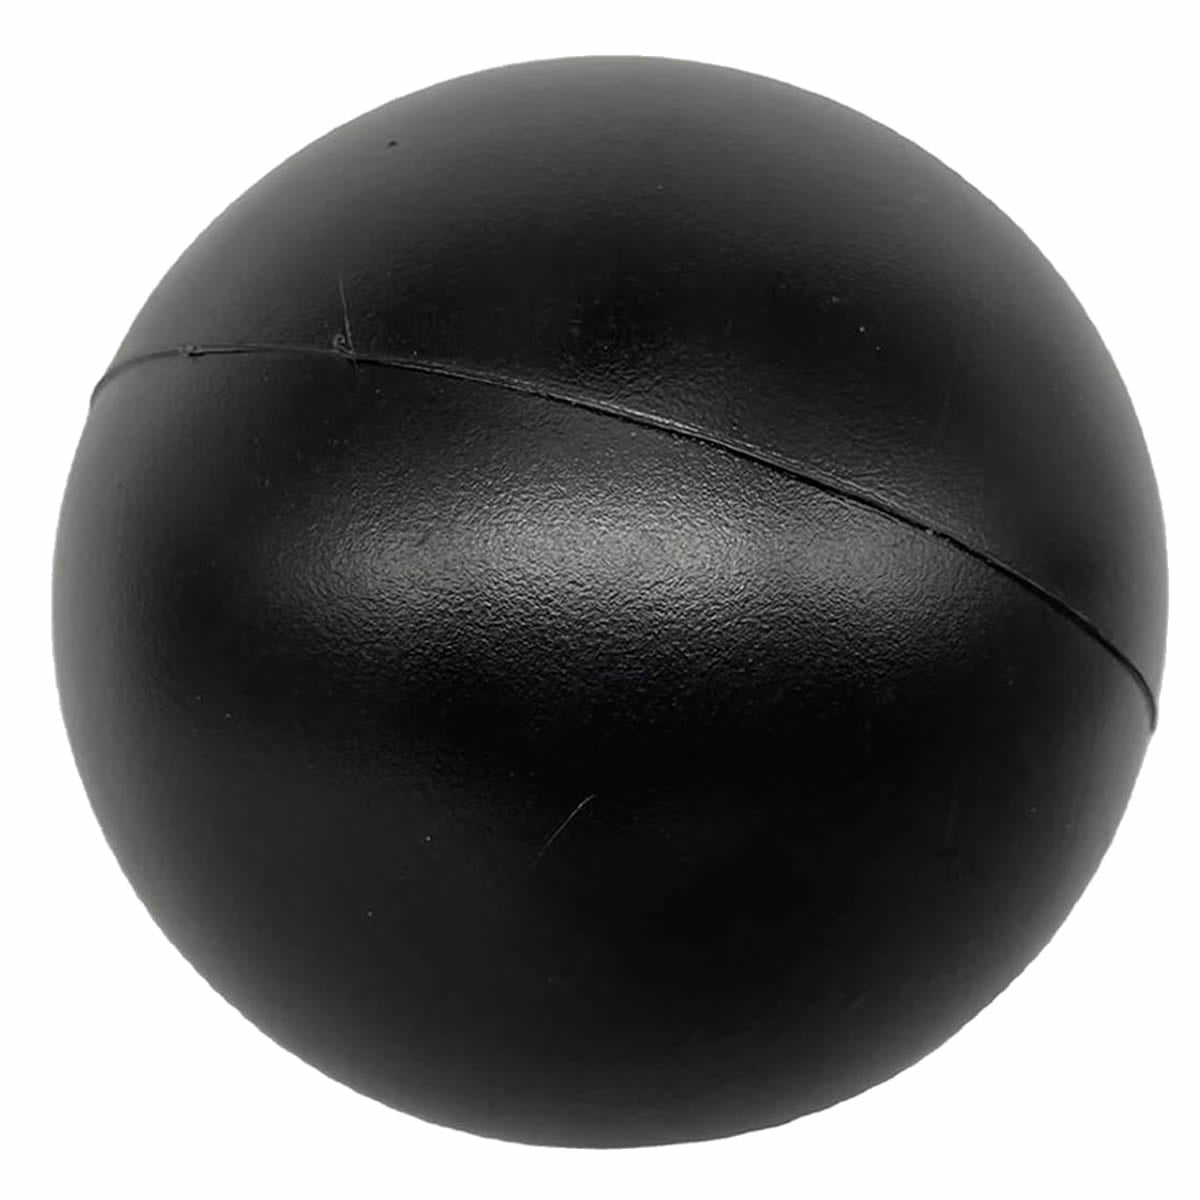 CLT-7 - Classic Stress Ball